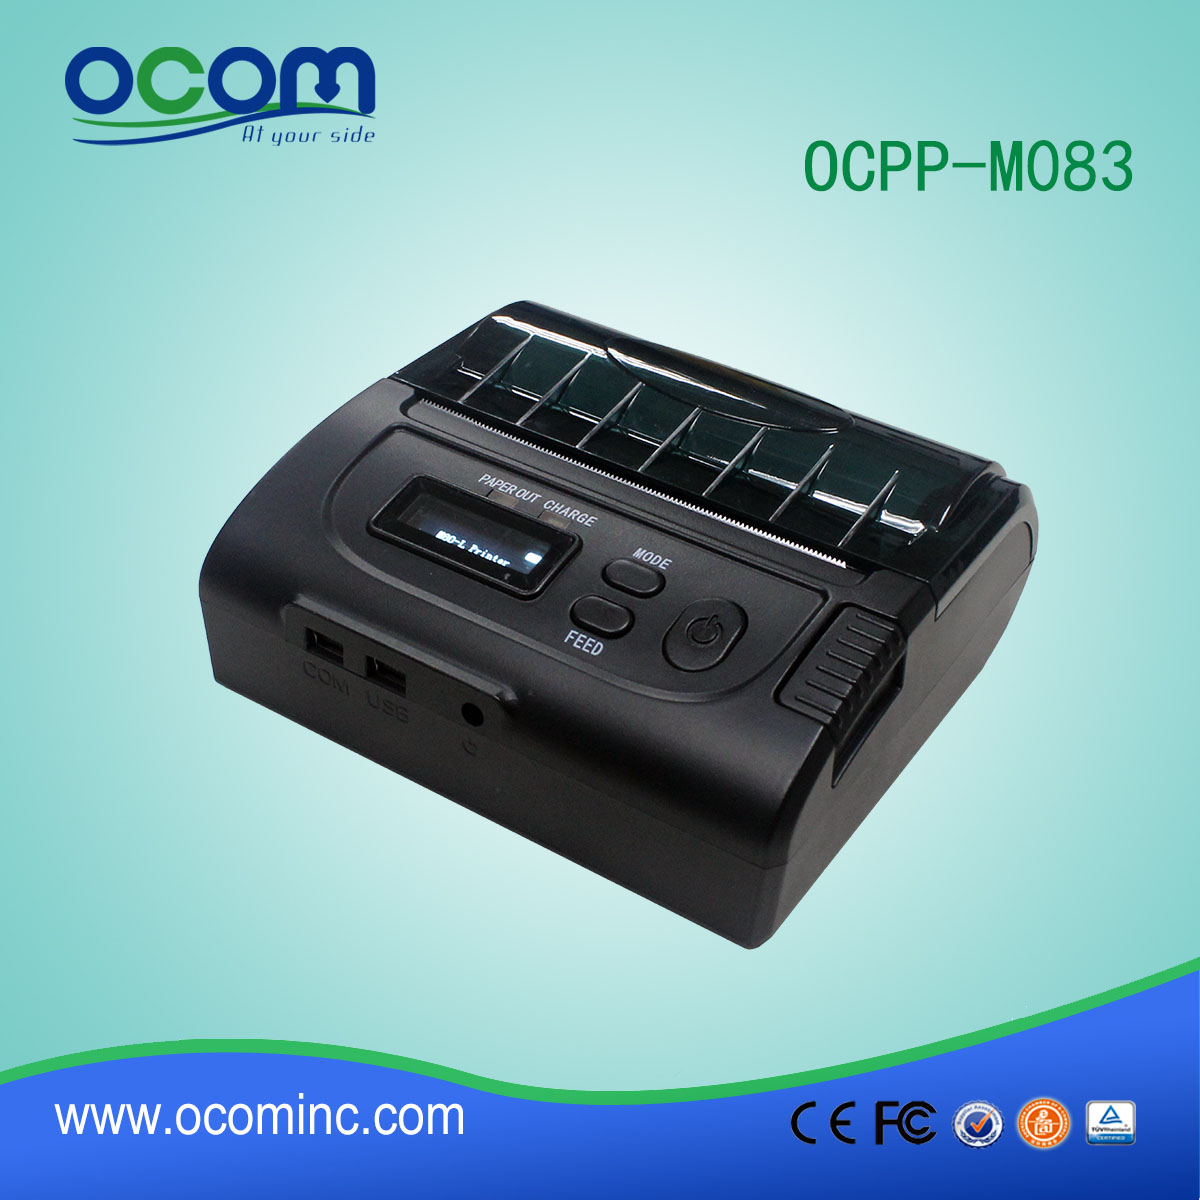 OCPP-M083 80mm Papier-Smartphone Bluetooth Mini-Drucker